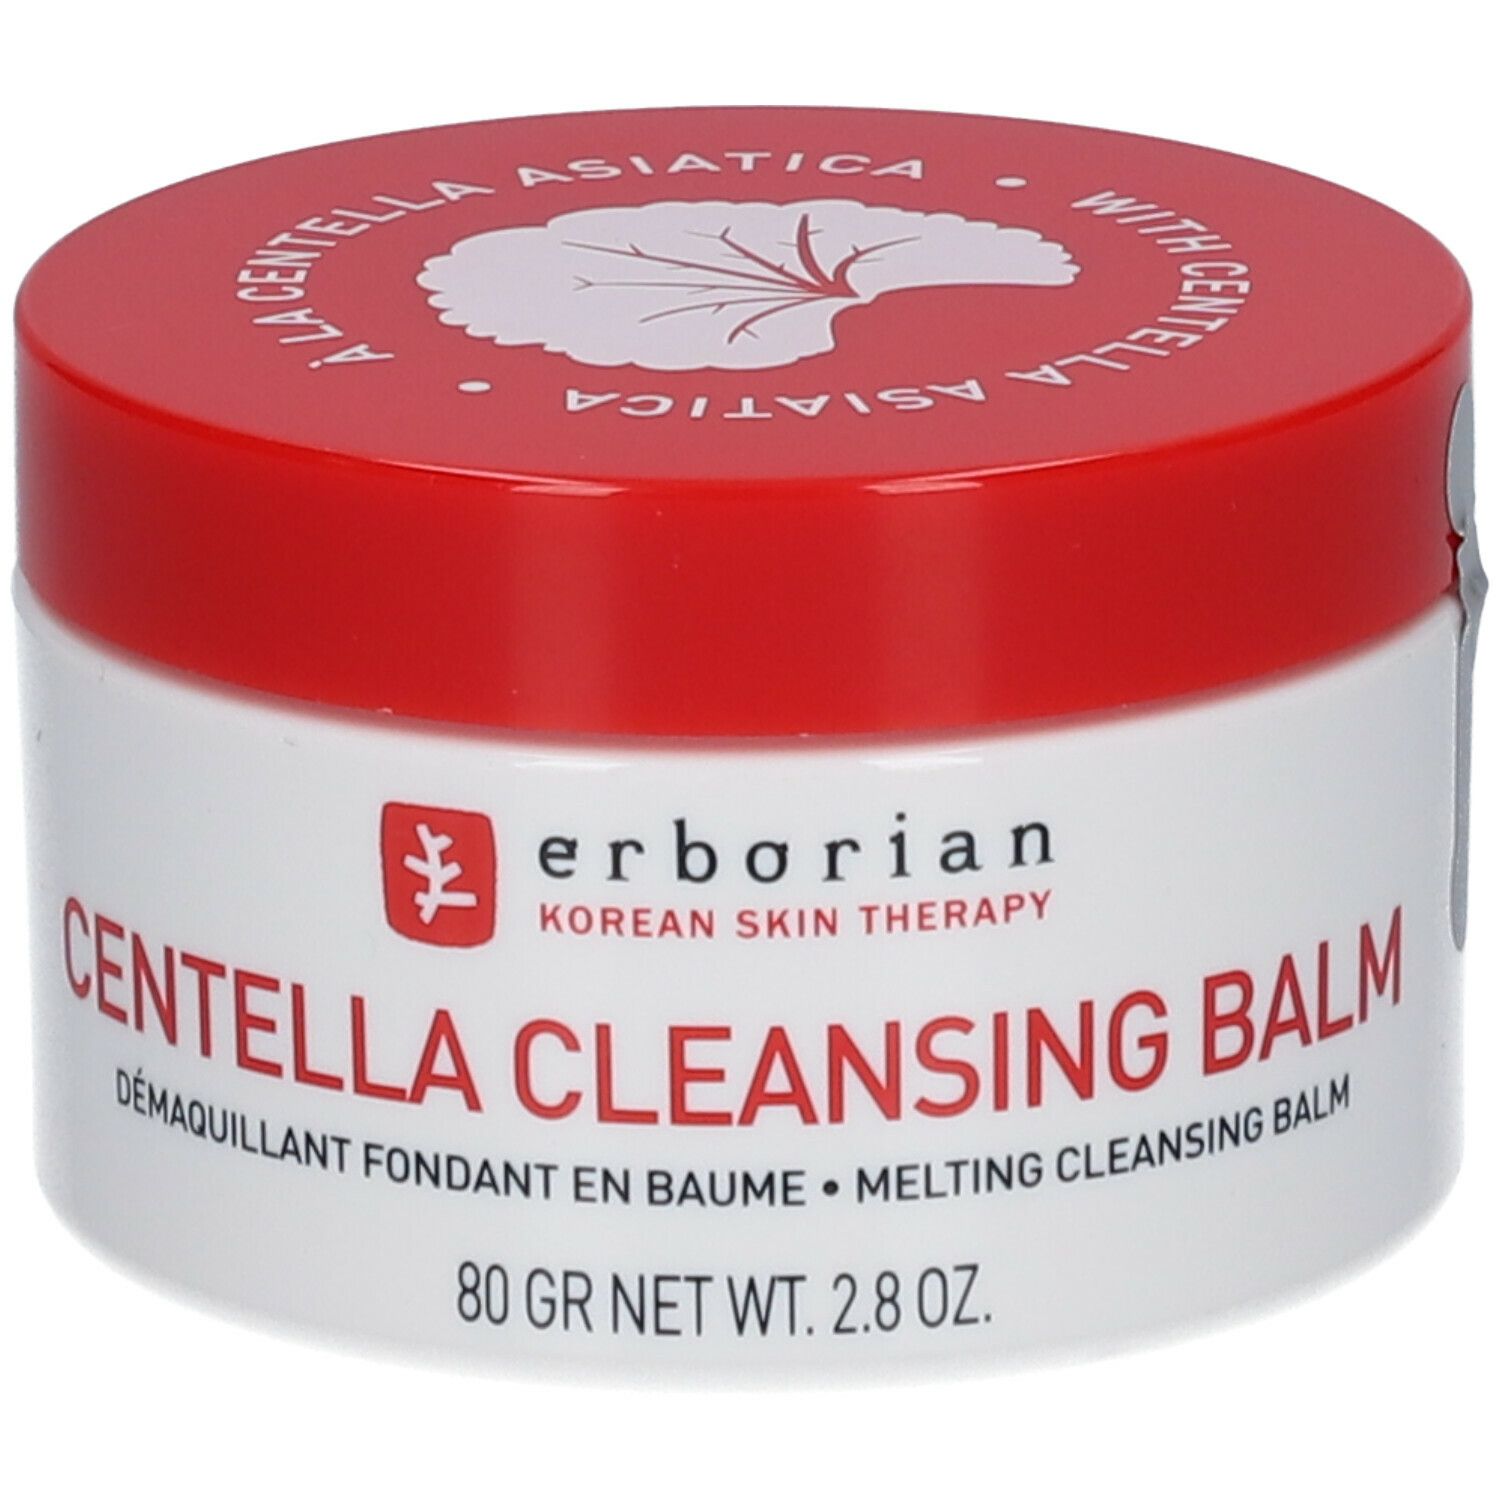 Erborian Korean Skin Therapy Paris Seoul Centella Cleansing Balm